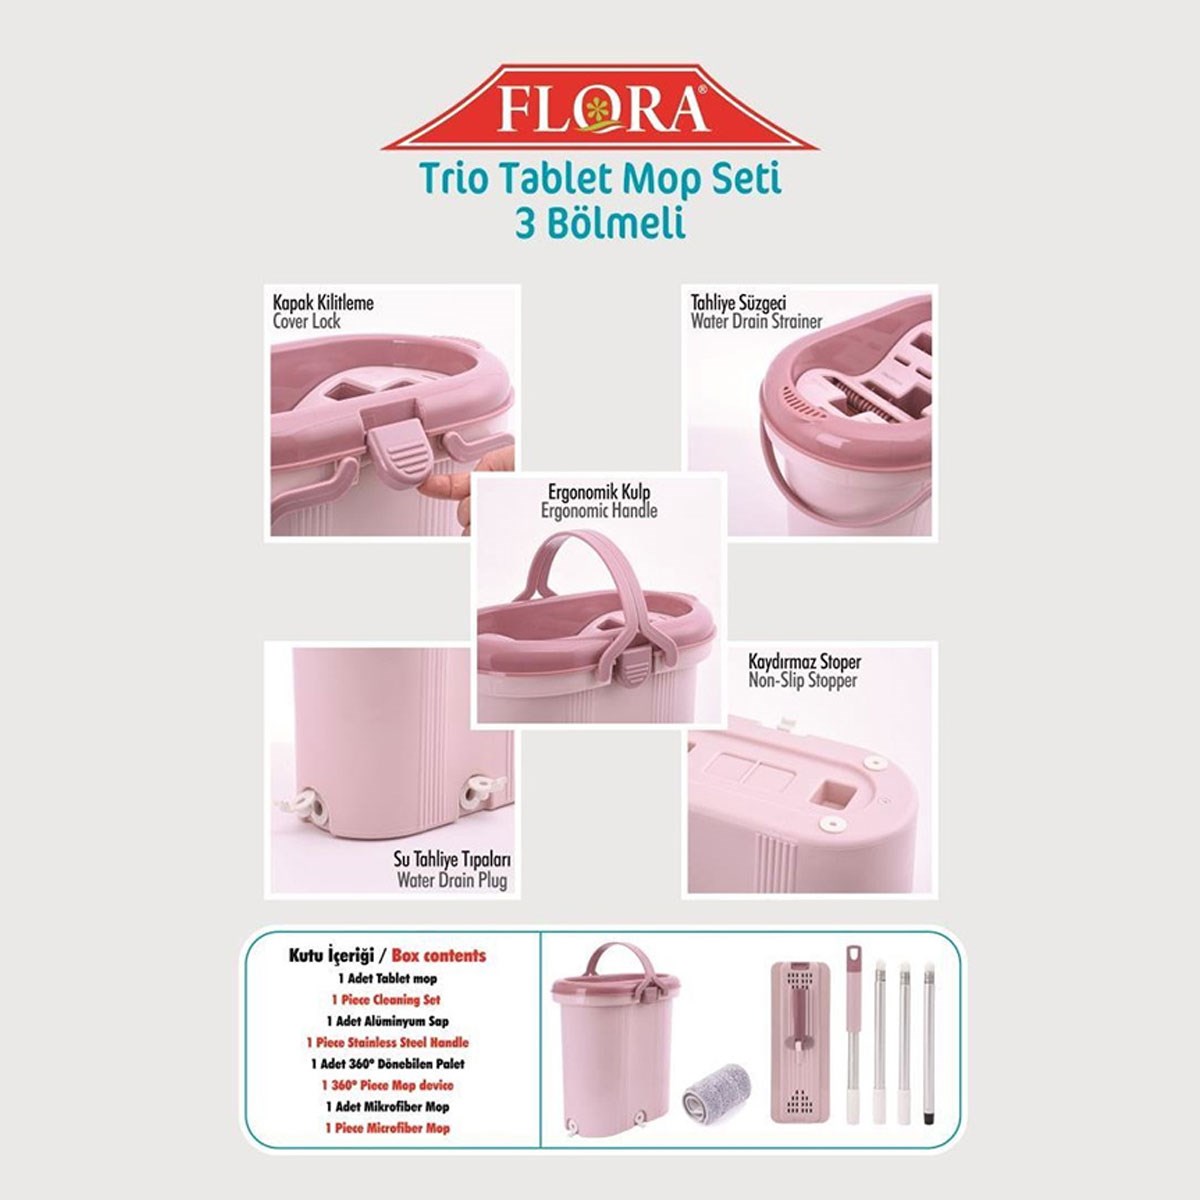 Flora Trio Tablet Mop Seti 3 Bölmeli - Kampanya, İndirim